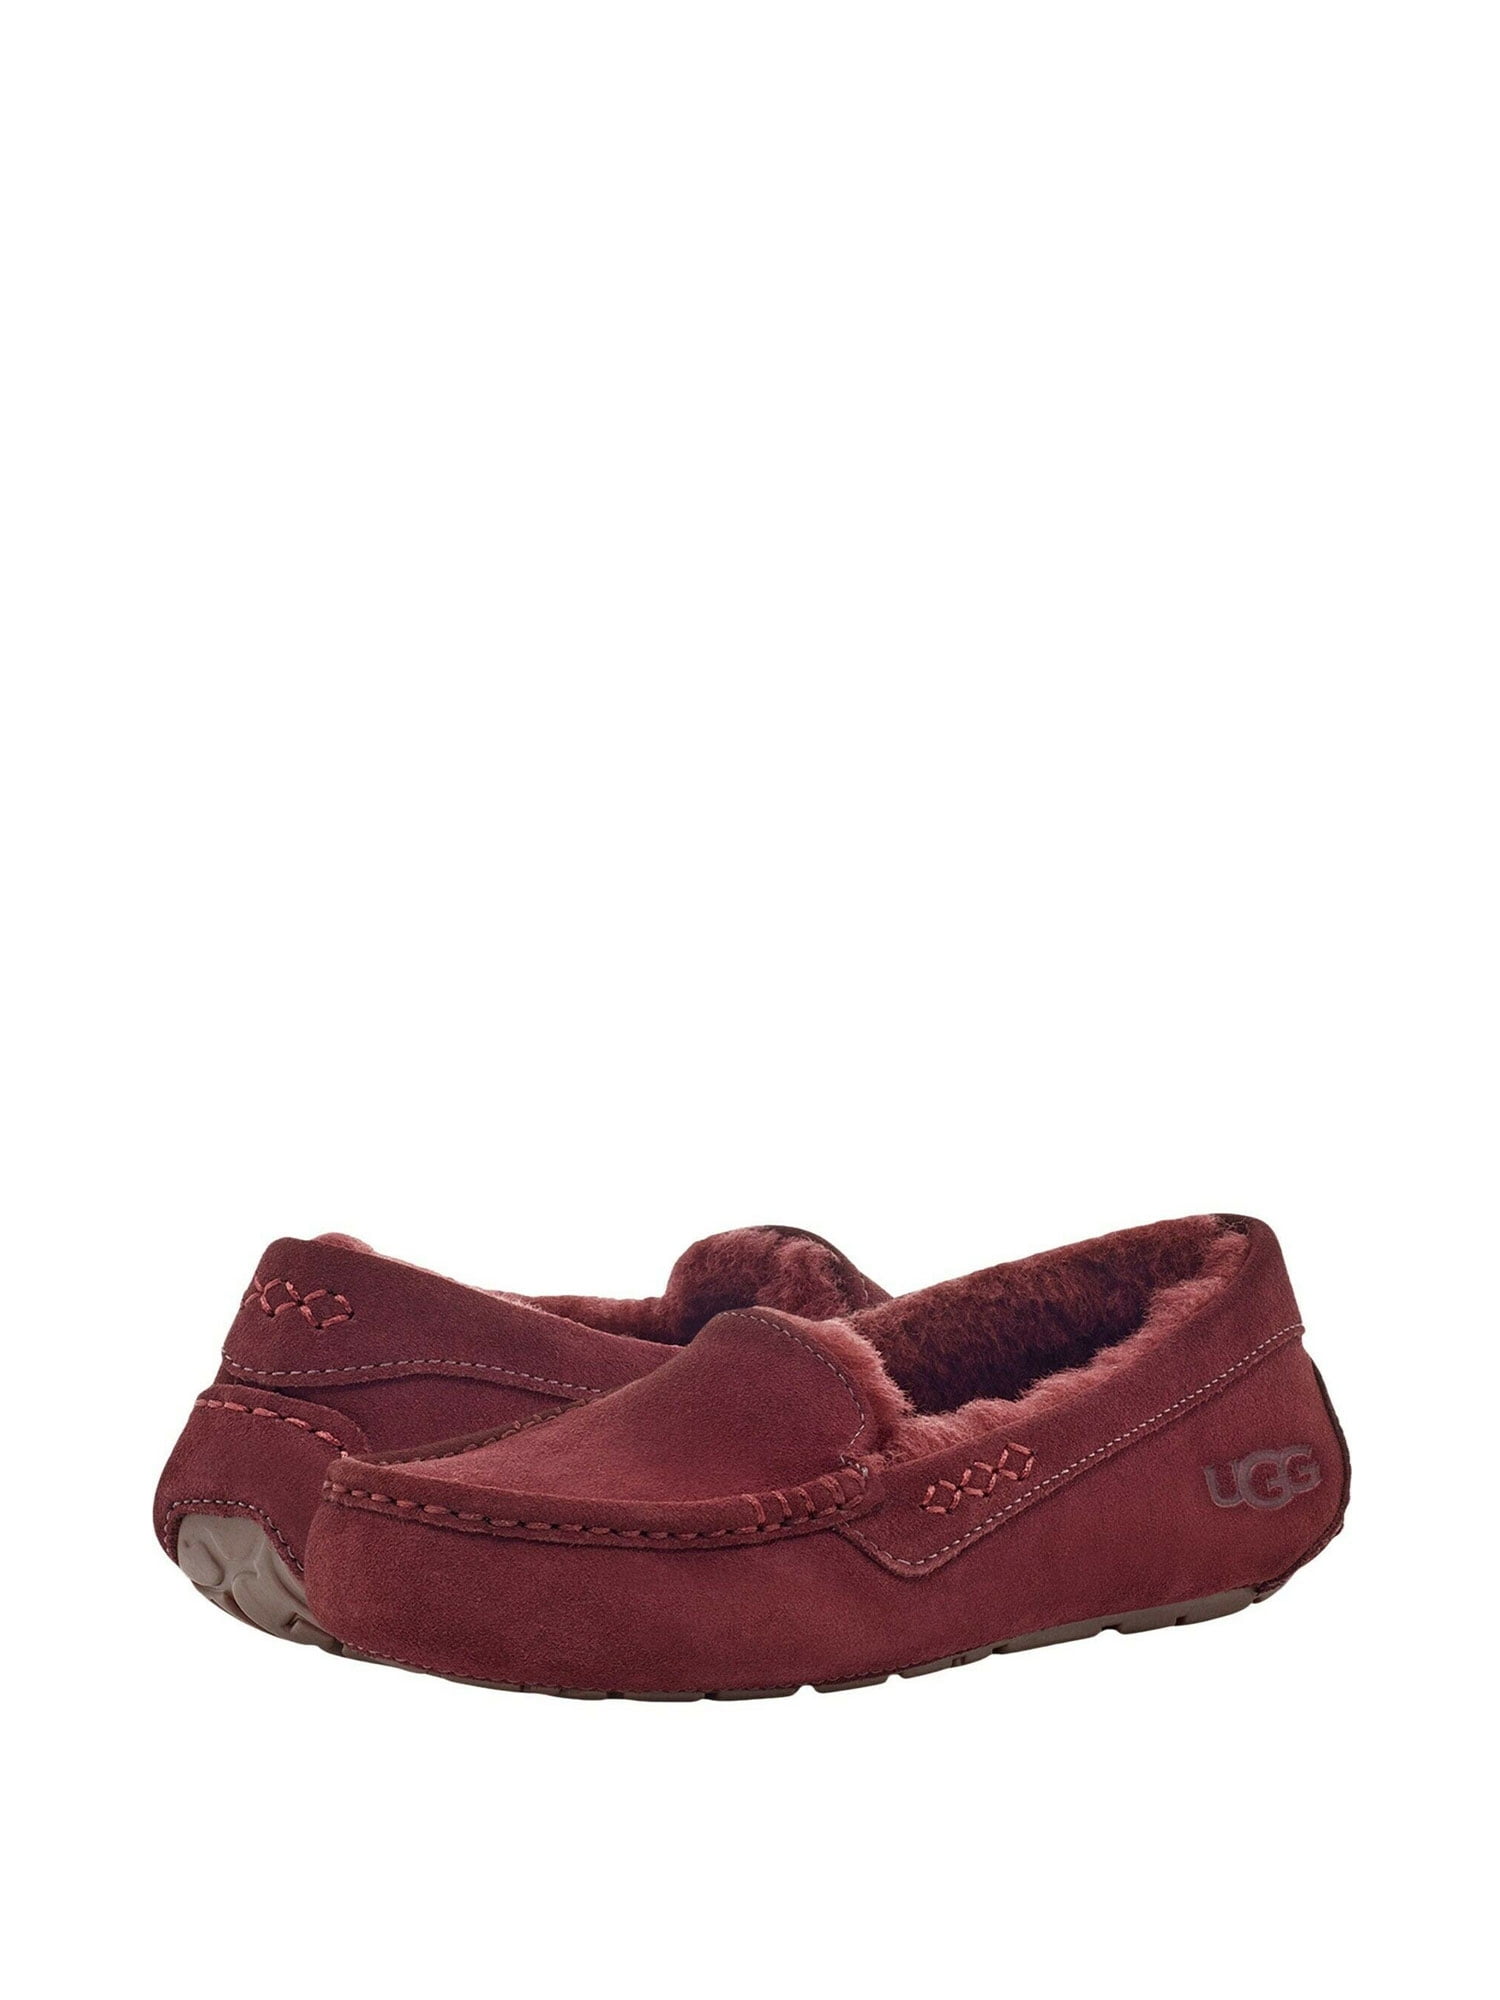 UGG Ansley Women's Water-resistant Suede Slippers Size 6 | Slipper outfit,  Suede slippers, Uggs